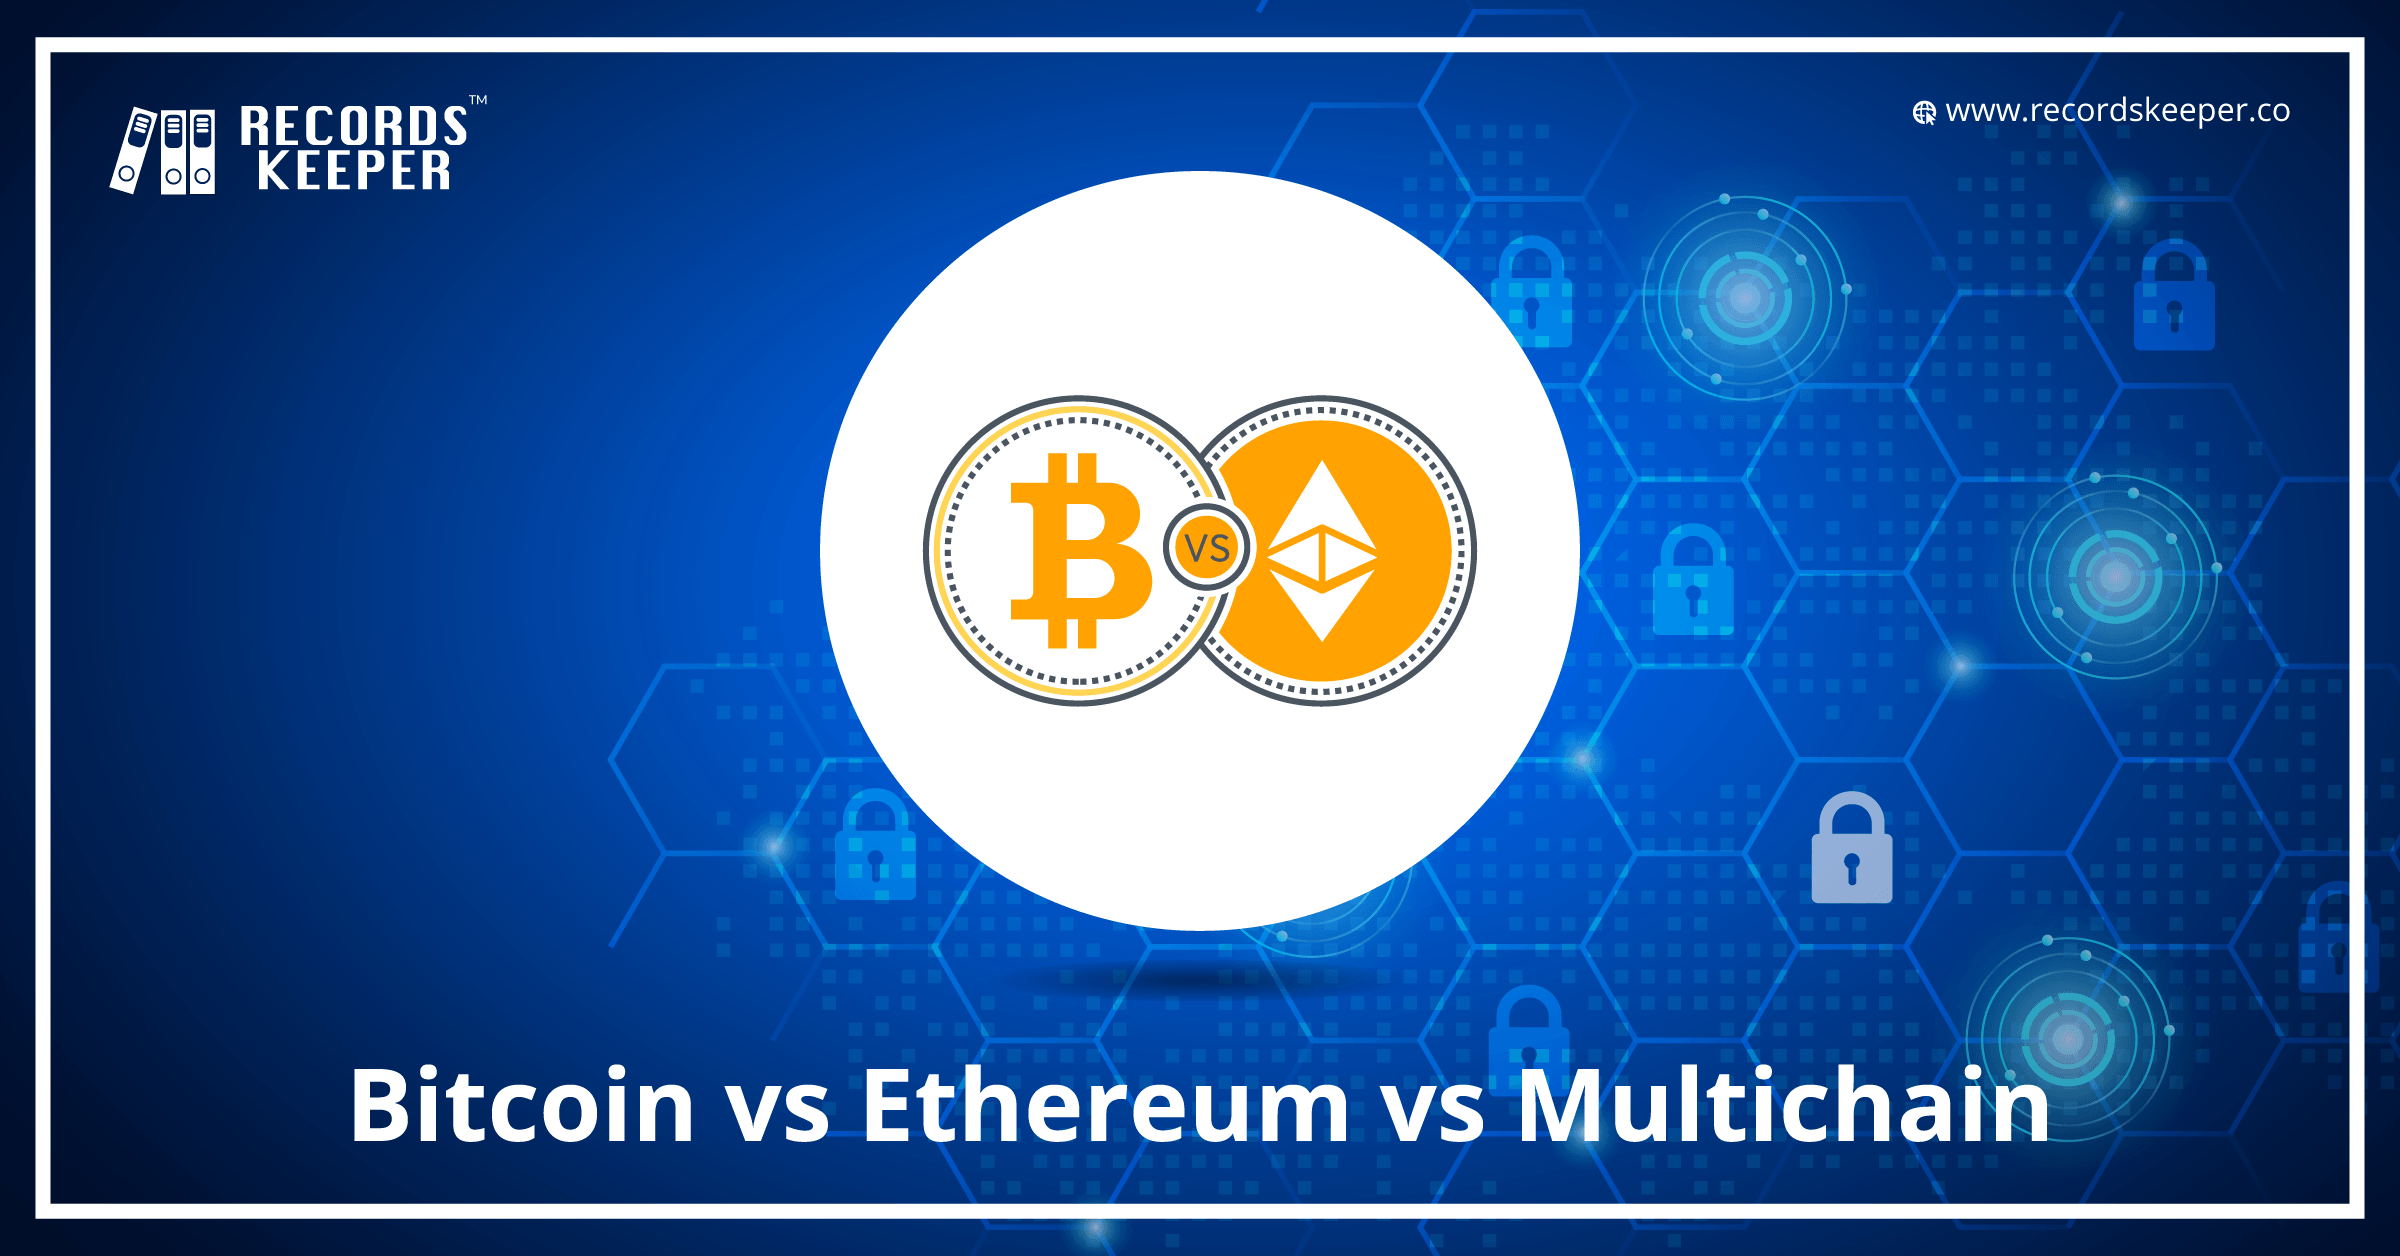 Bitcoin versus Multichain versus Ethereum